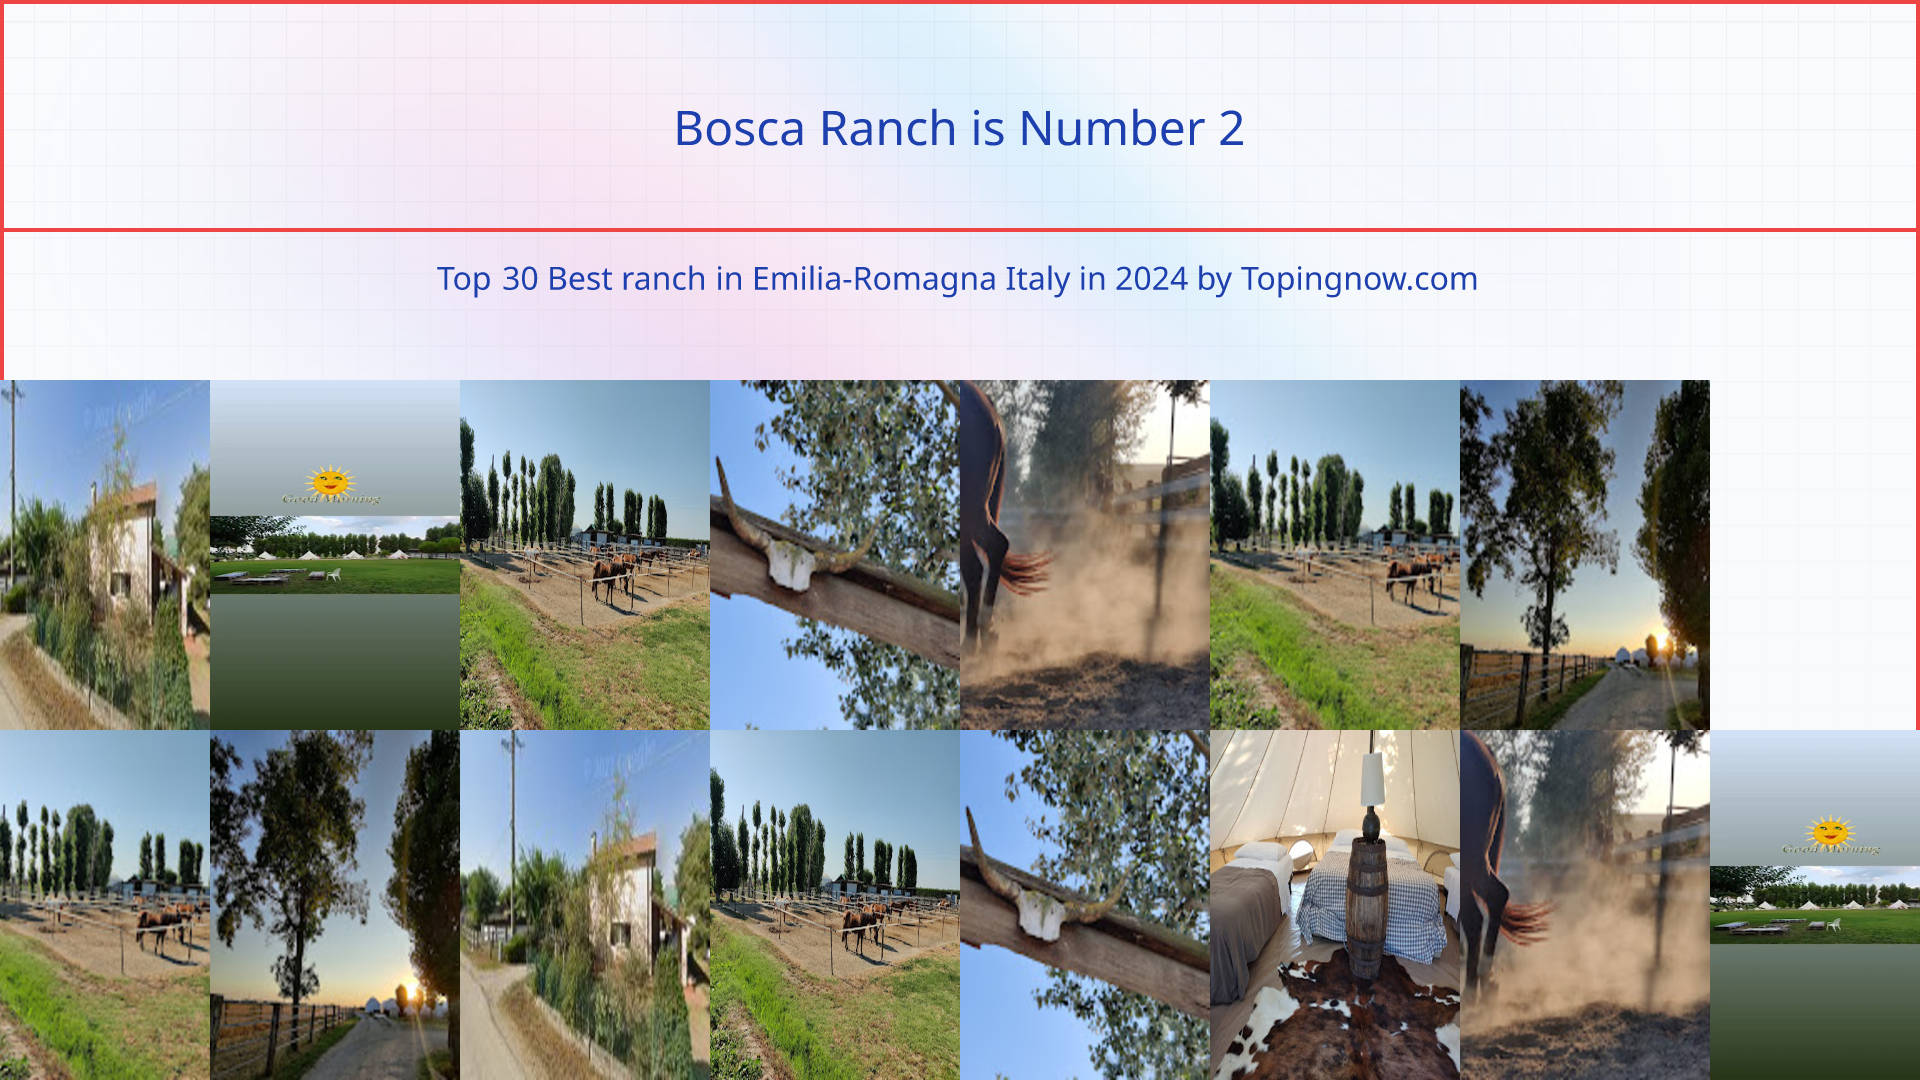 Bosca Ranch: Top 30 Best ranch in Emilia-Romagna Italy in 2024